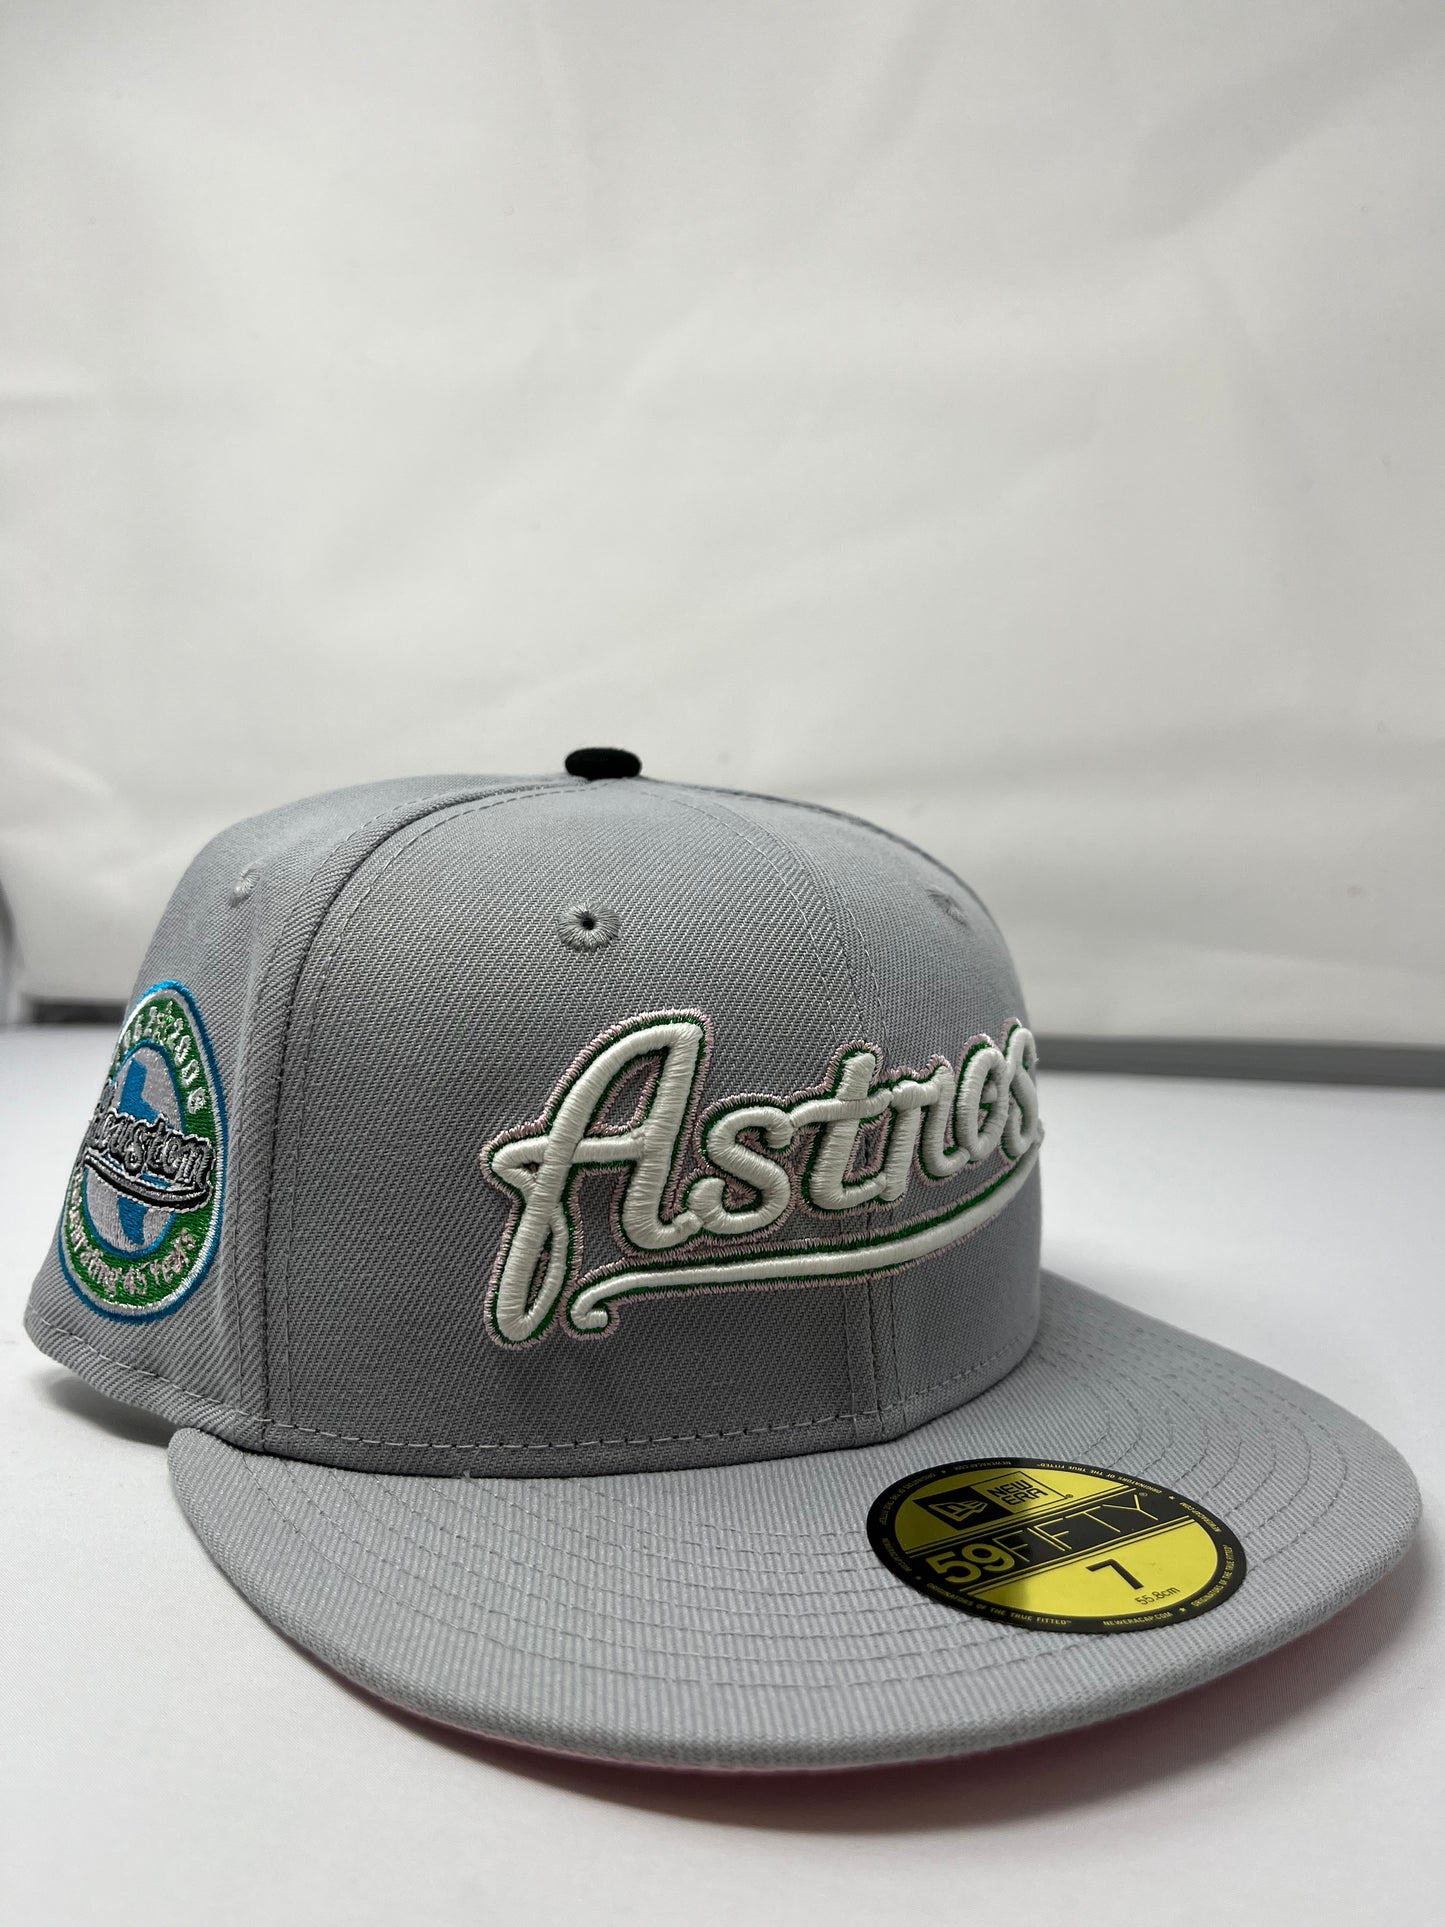 Houston Astros “Gray/Metallic Green/Pink” Hat